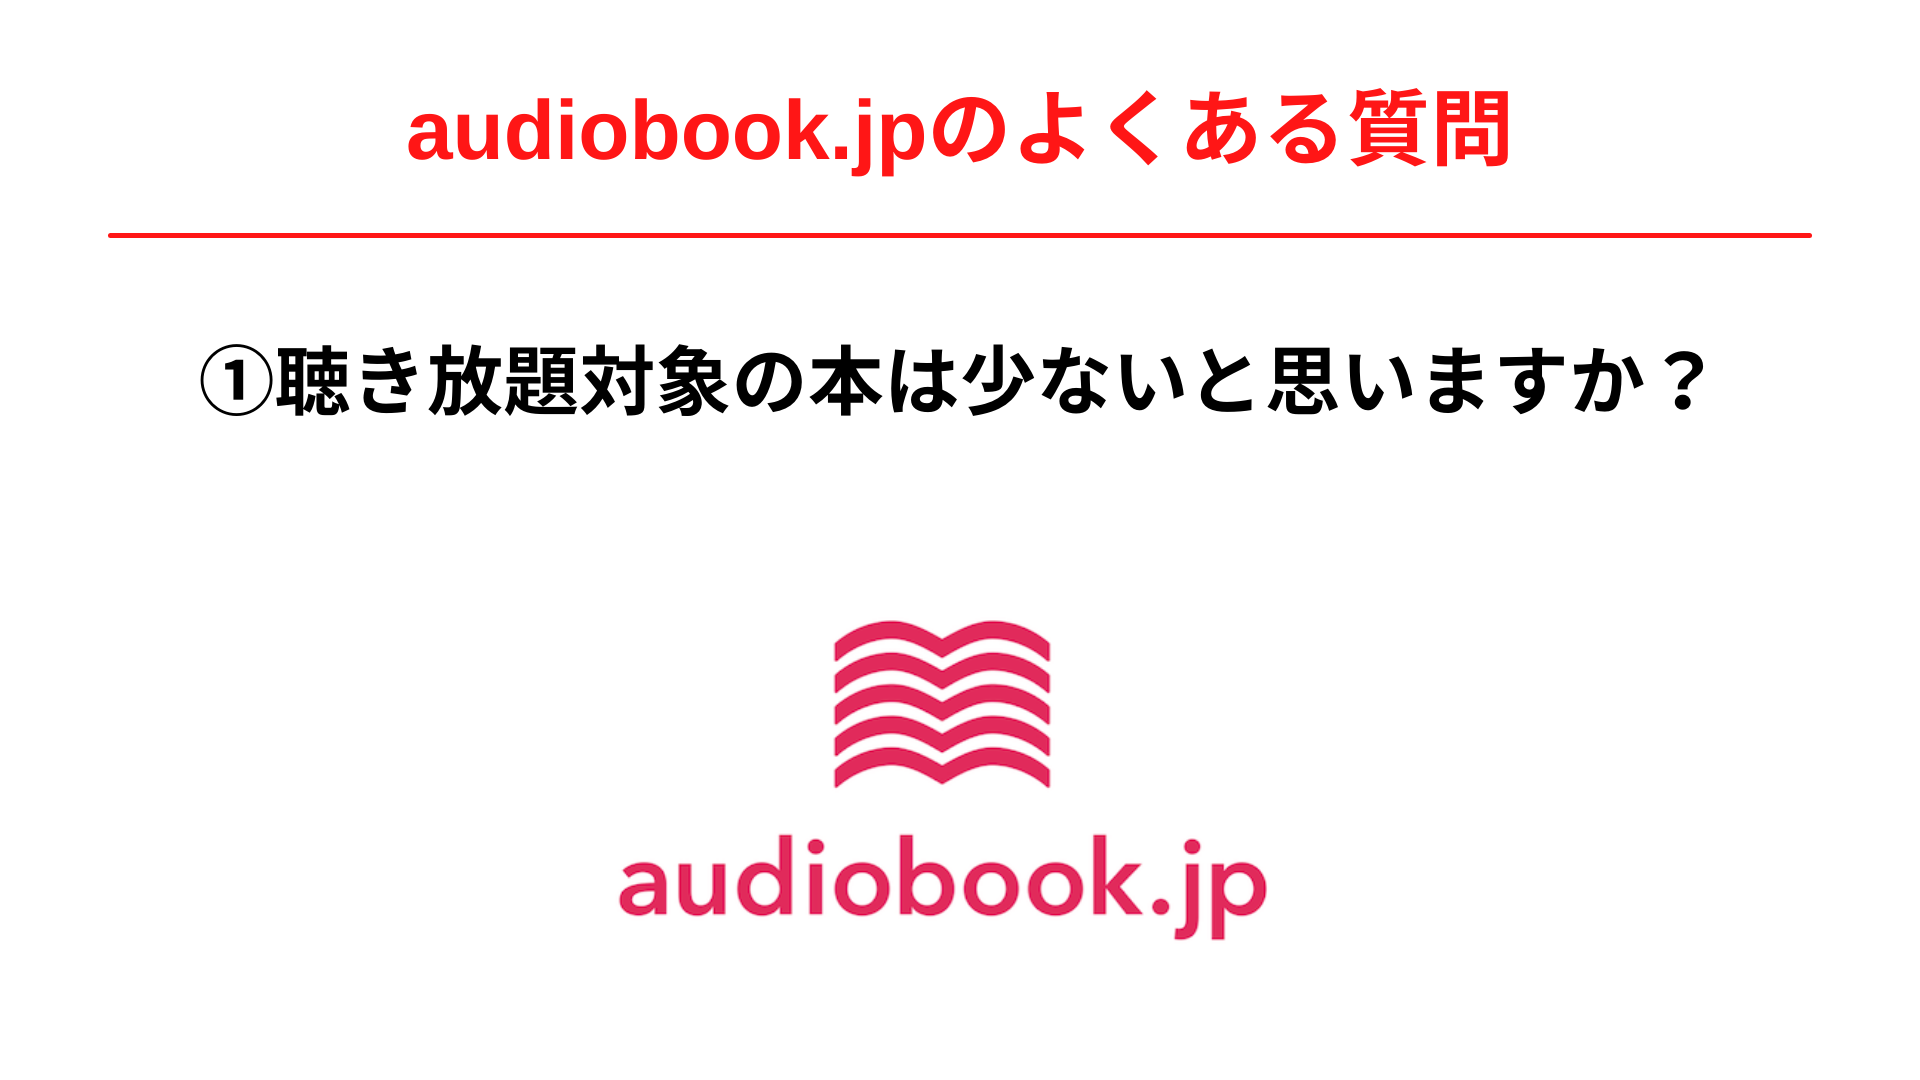 audiobook.jpの聴き放題対象の本は少ないと思いますか？